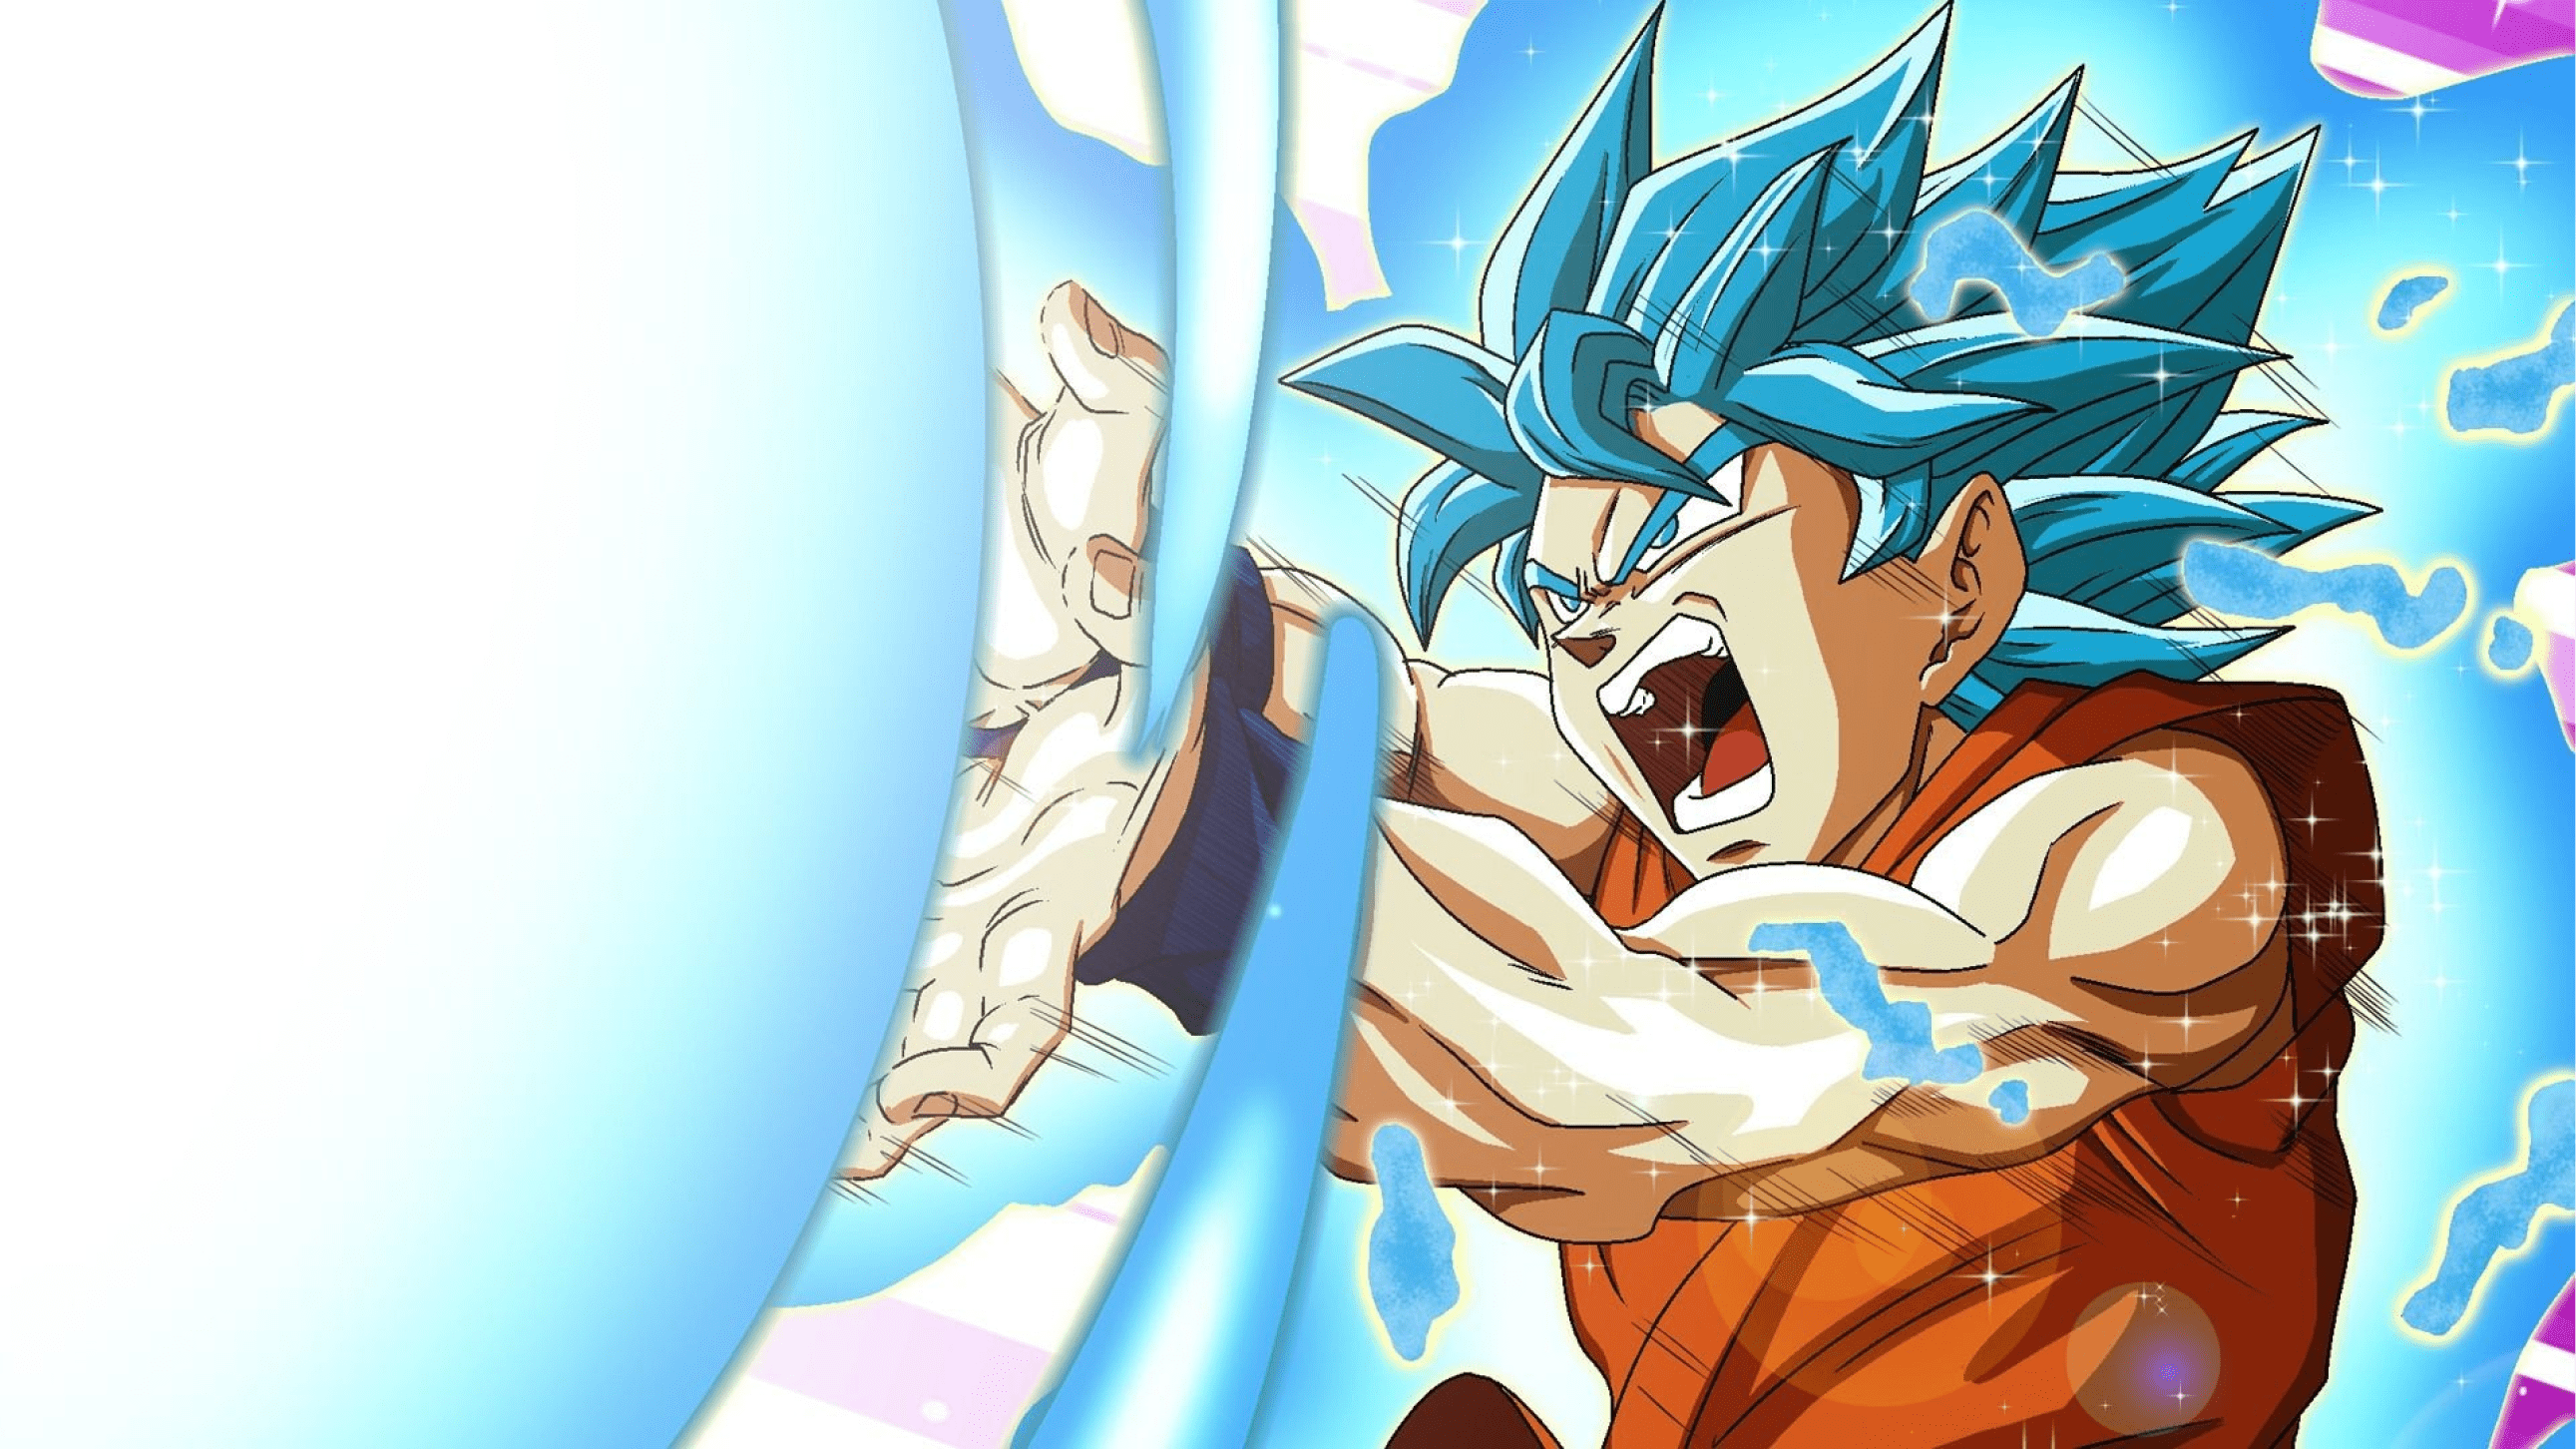 Goku faces enemies with Kamehameha